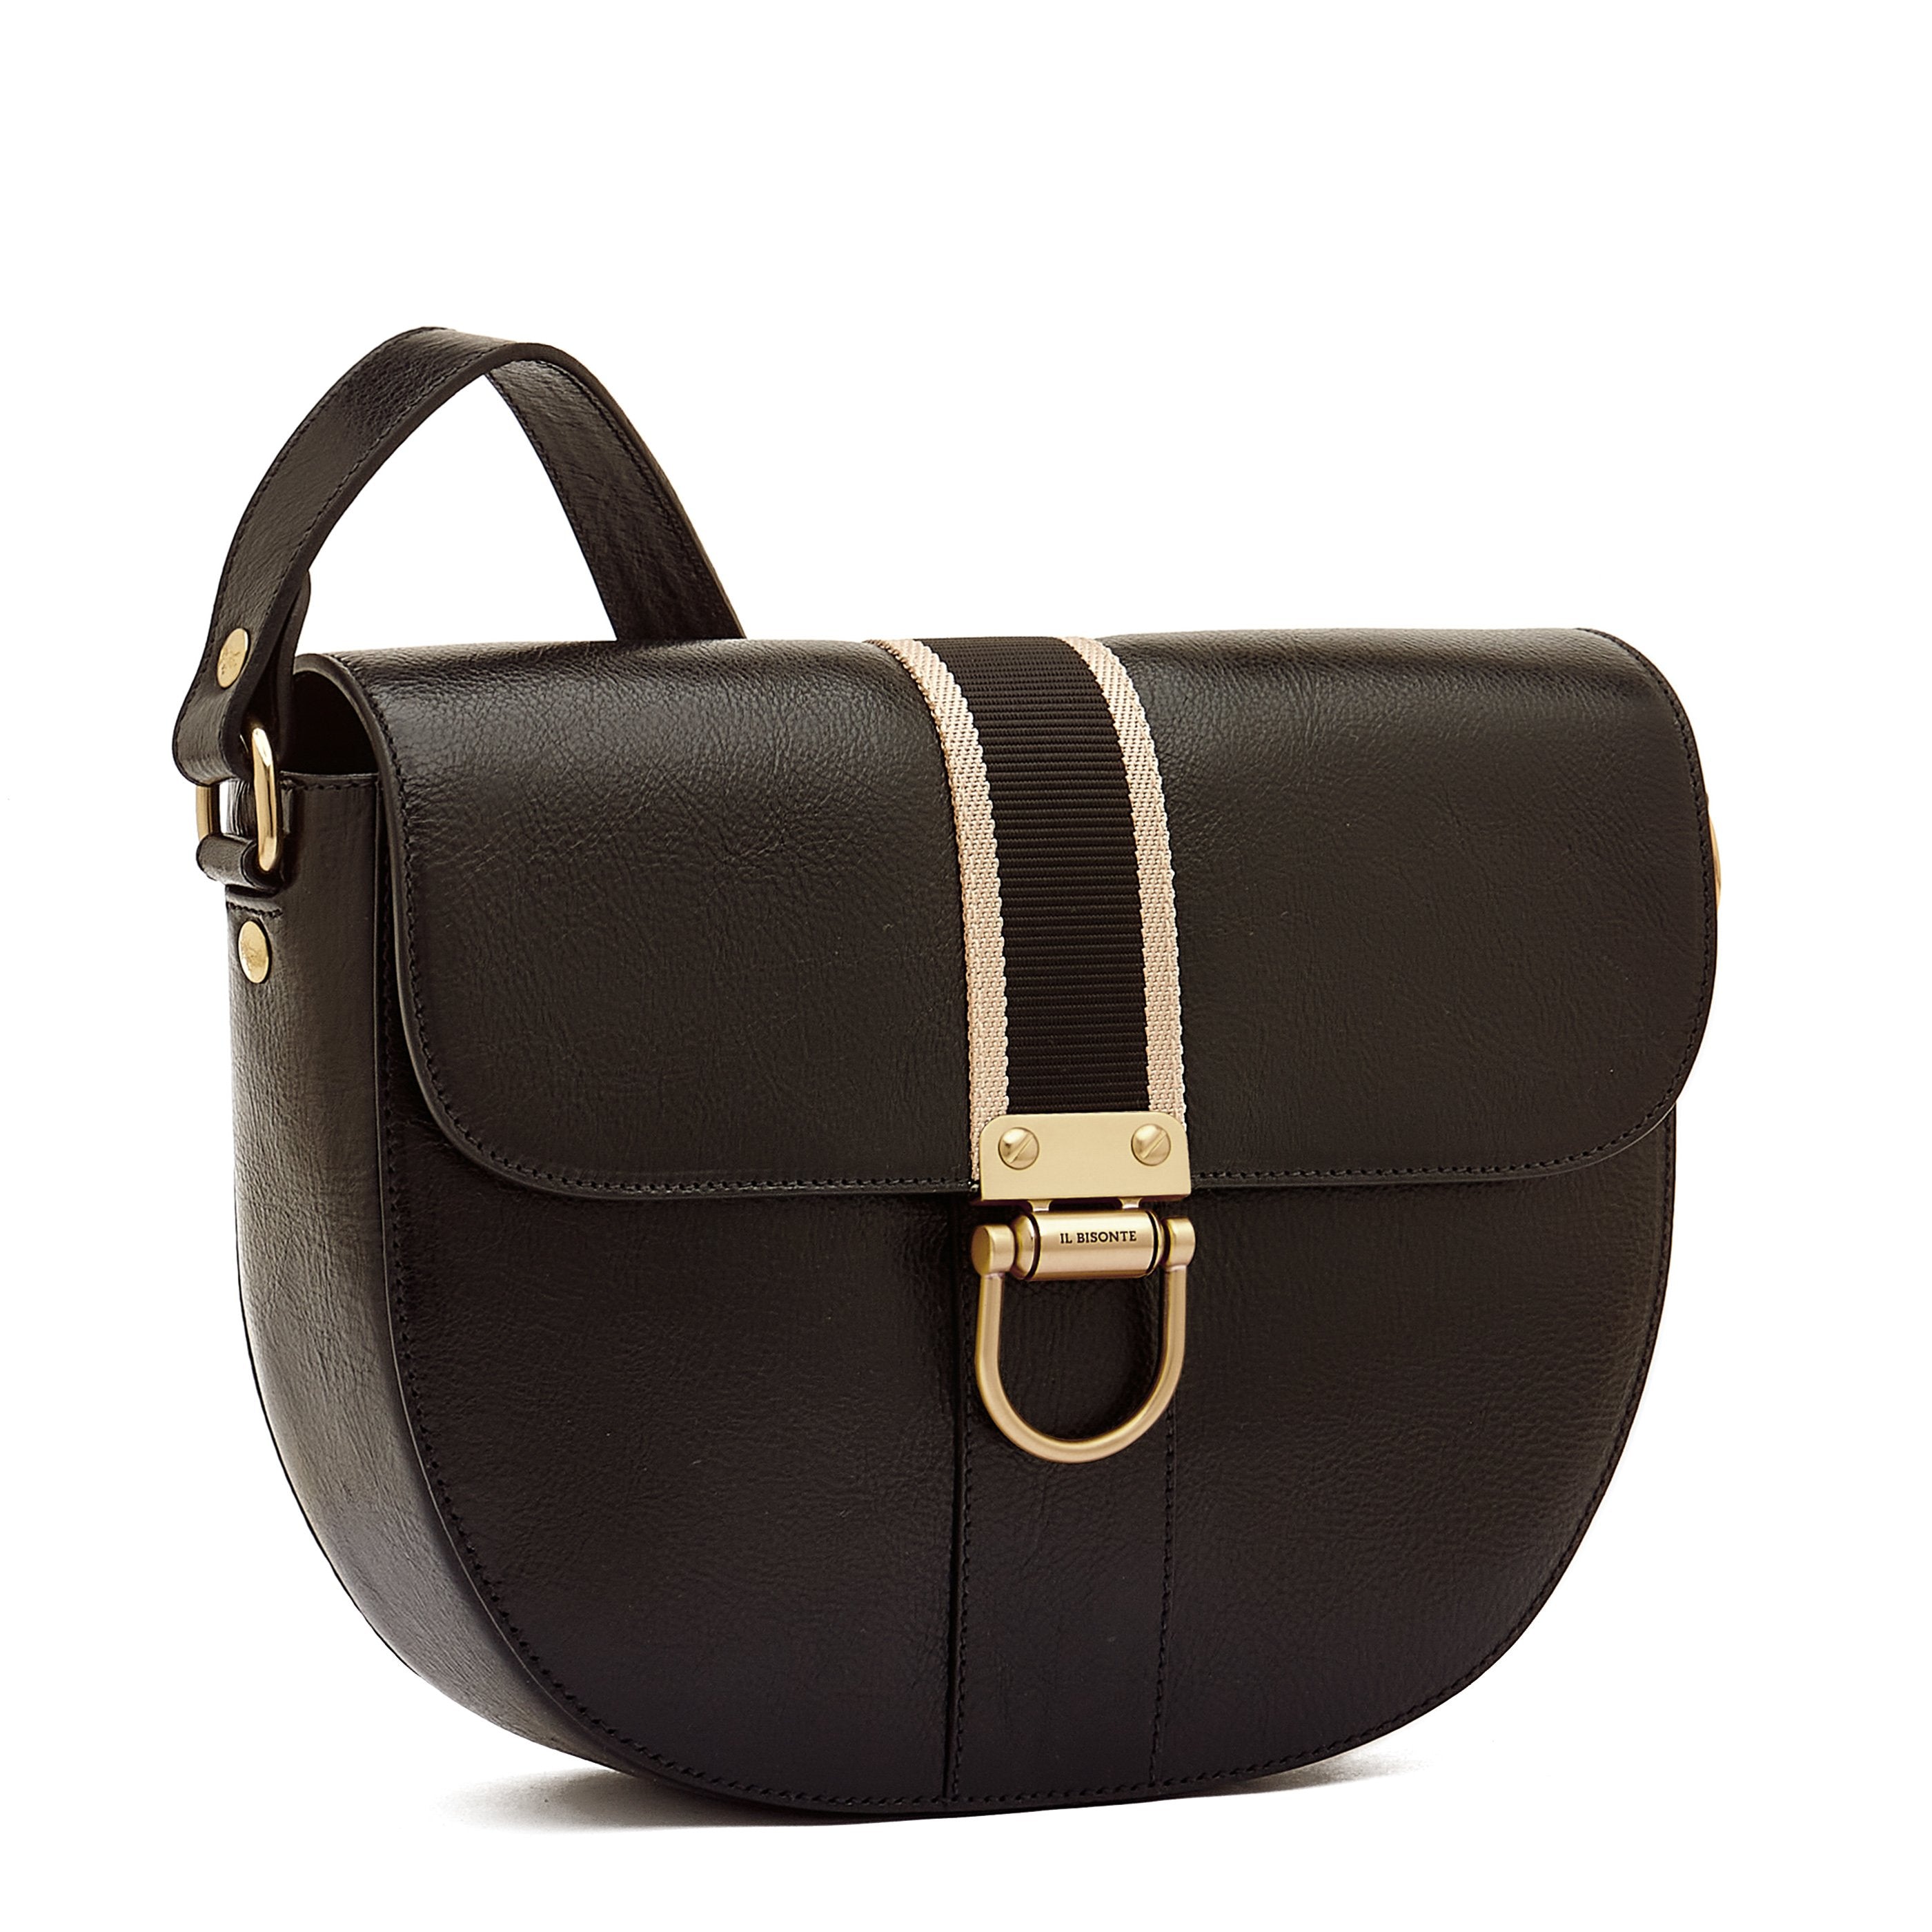 GB Small Crossbody Bags & Handbags for Women for sale | eBay